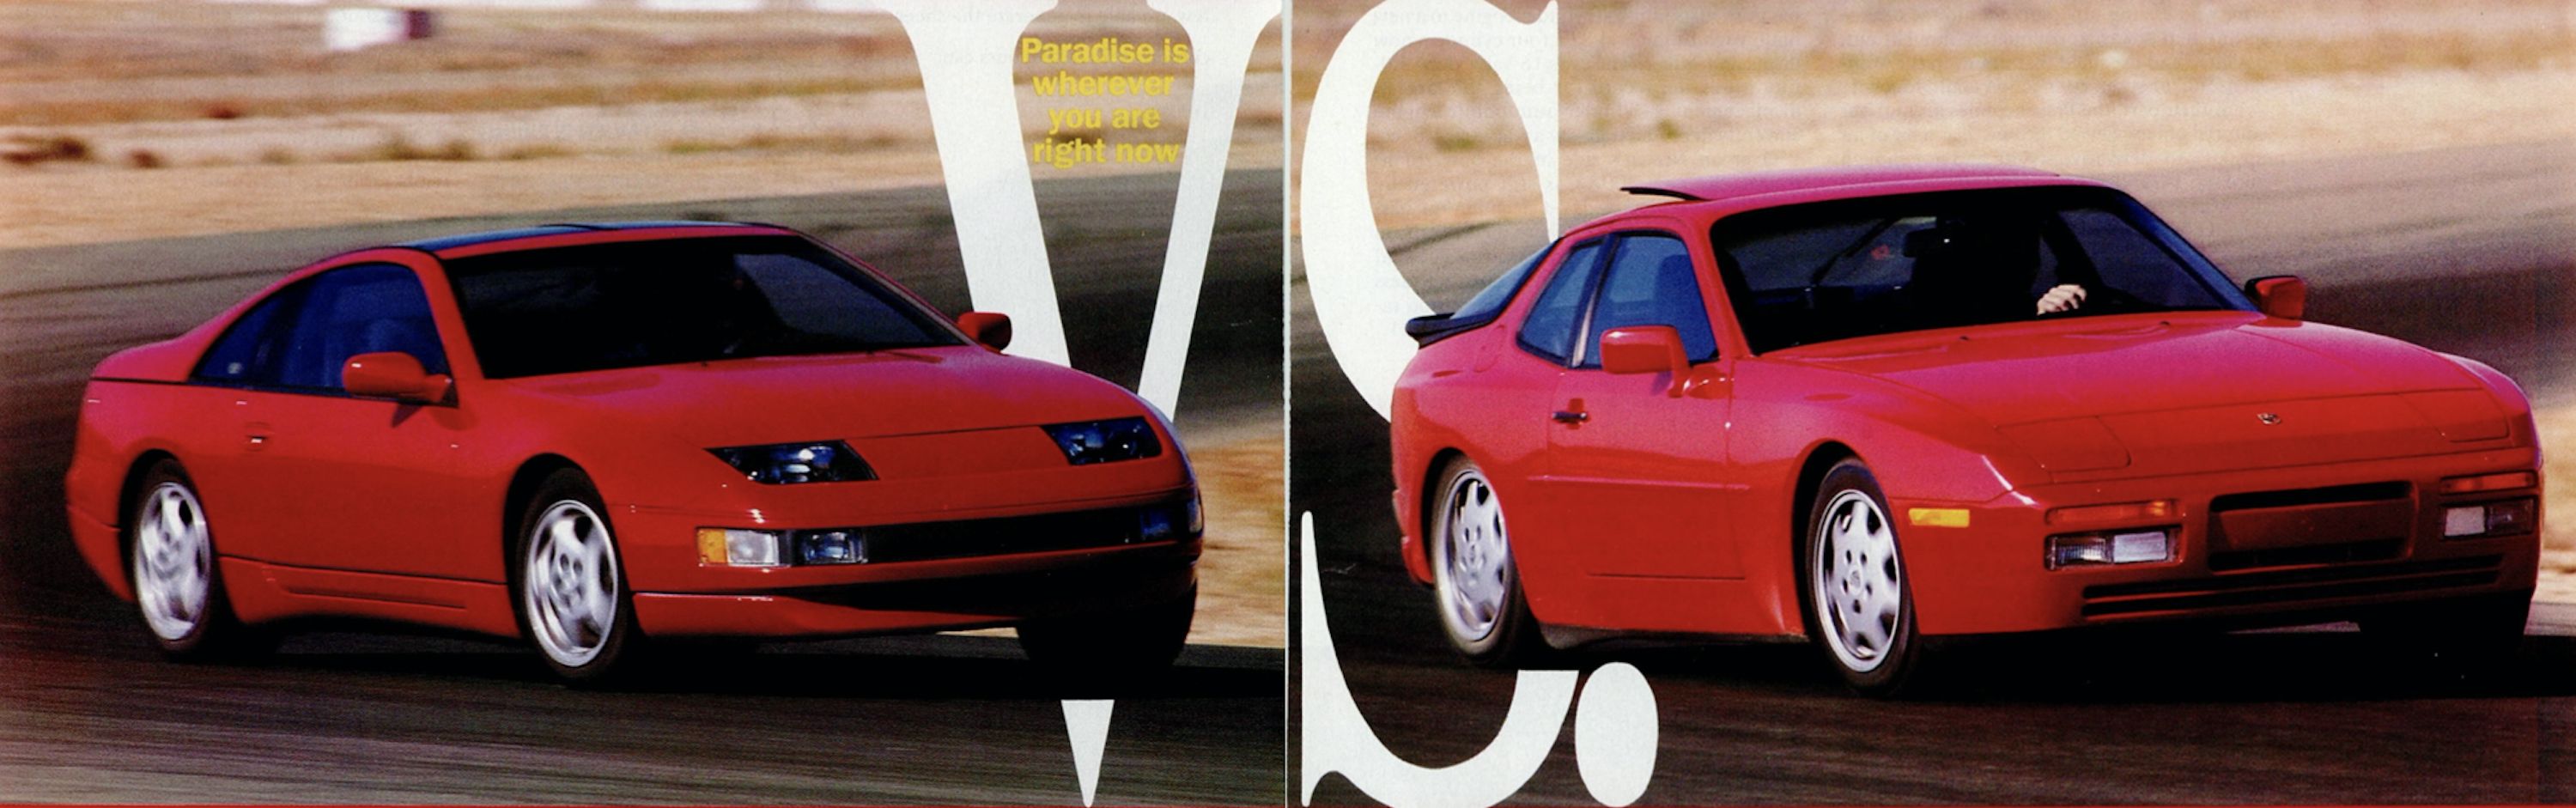 Paradise on Wheels: 1990 Nissan 300ZX vs. Porsche 944 S2